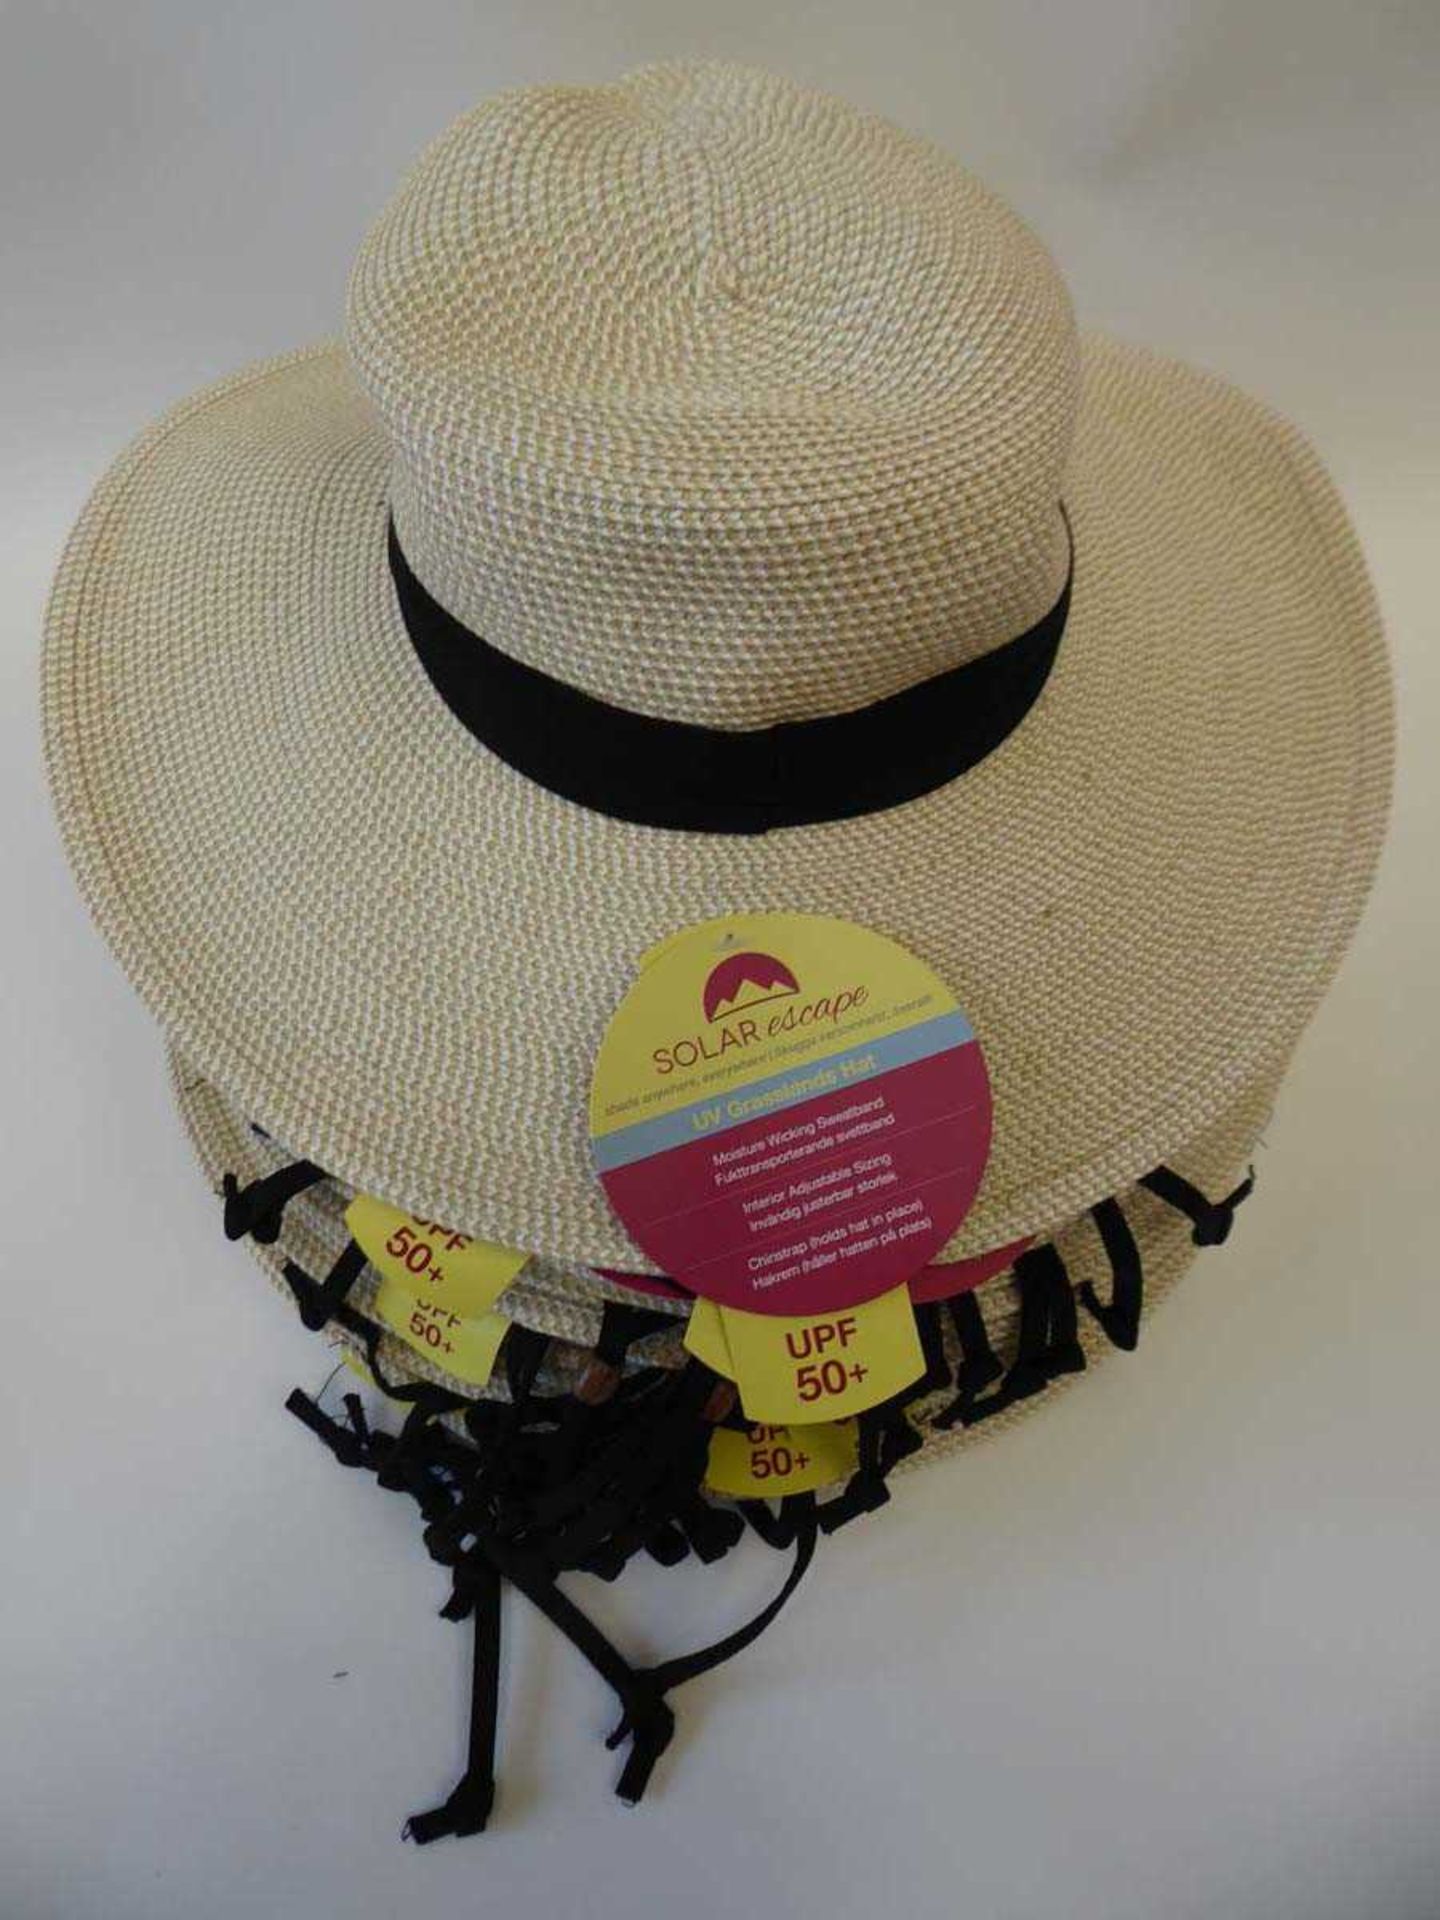 +VAT Approx. 20 Solar Escape UV grasslands hats